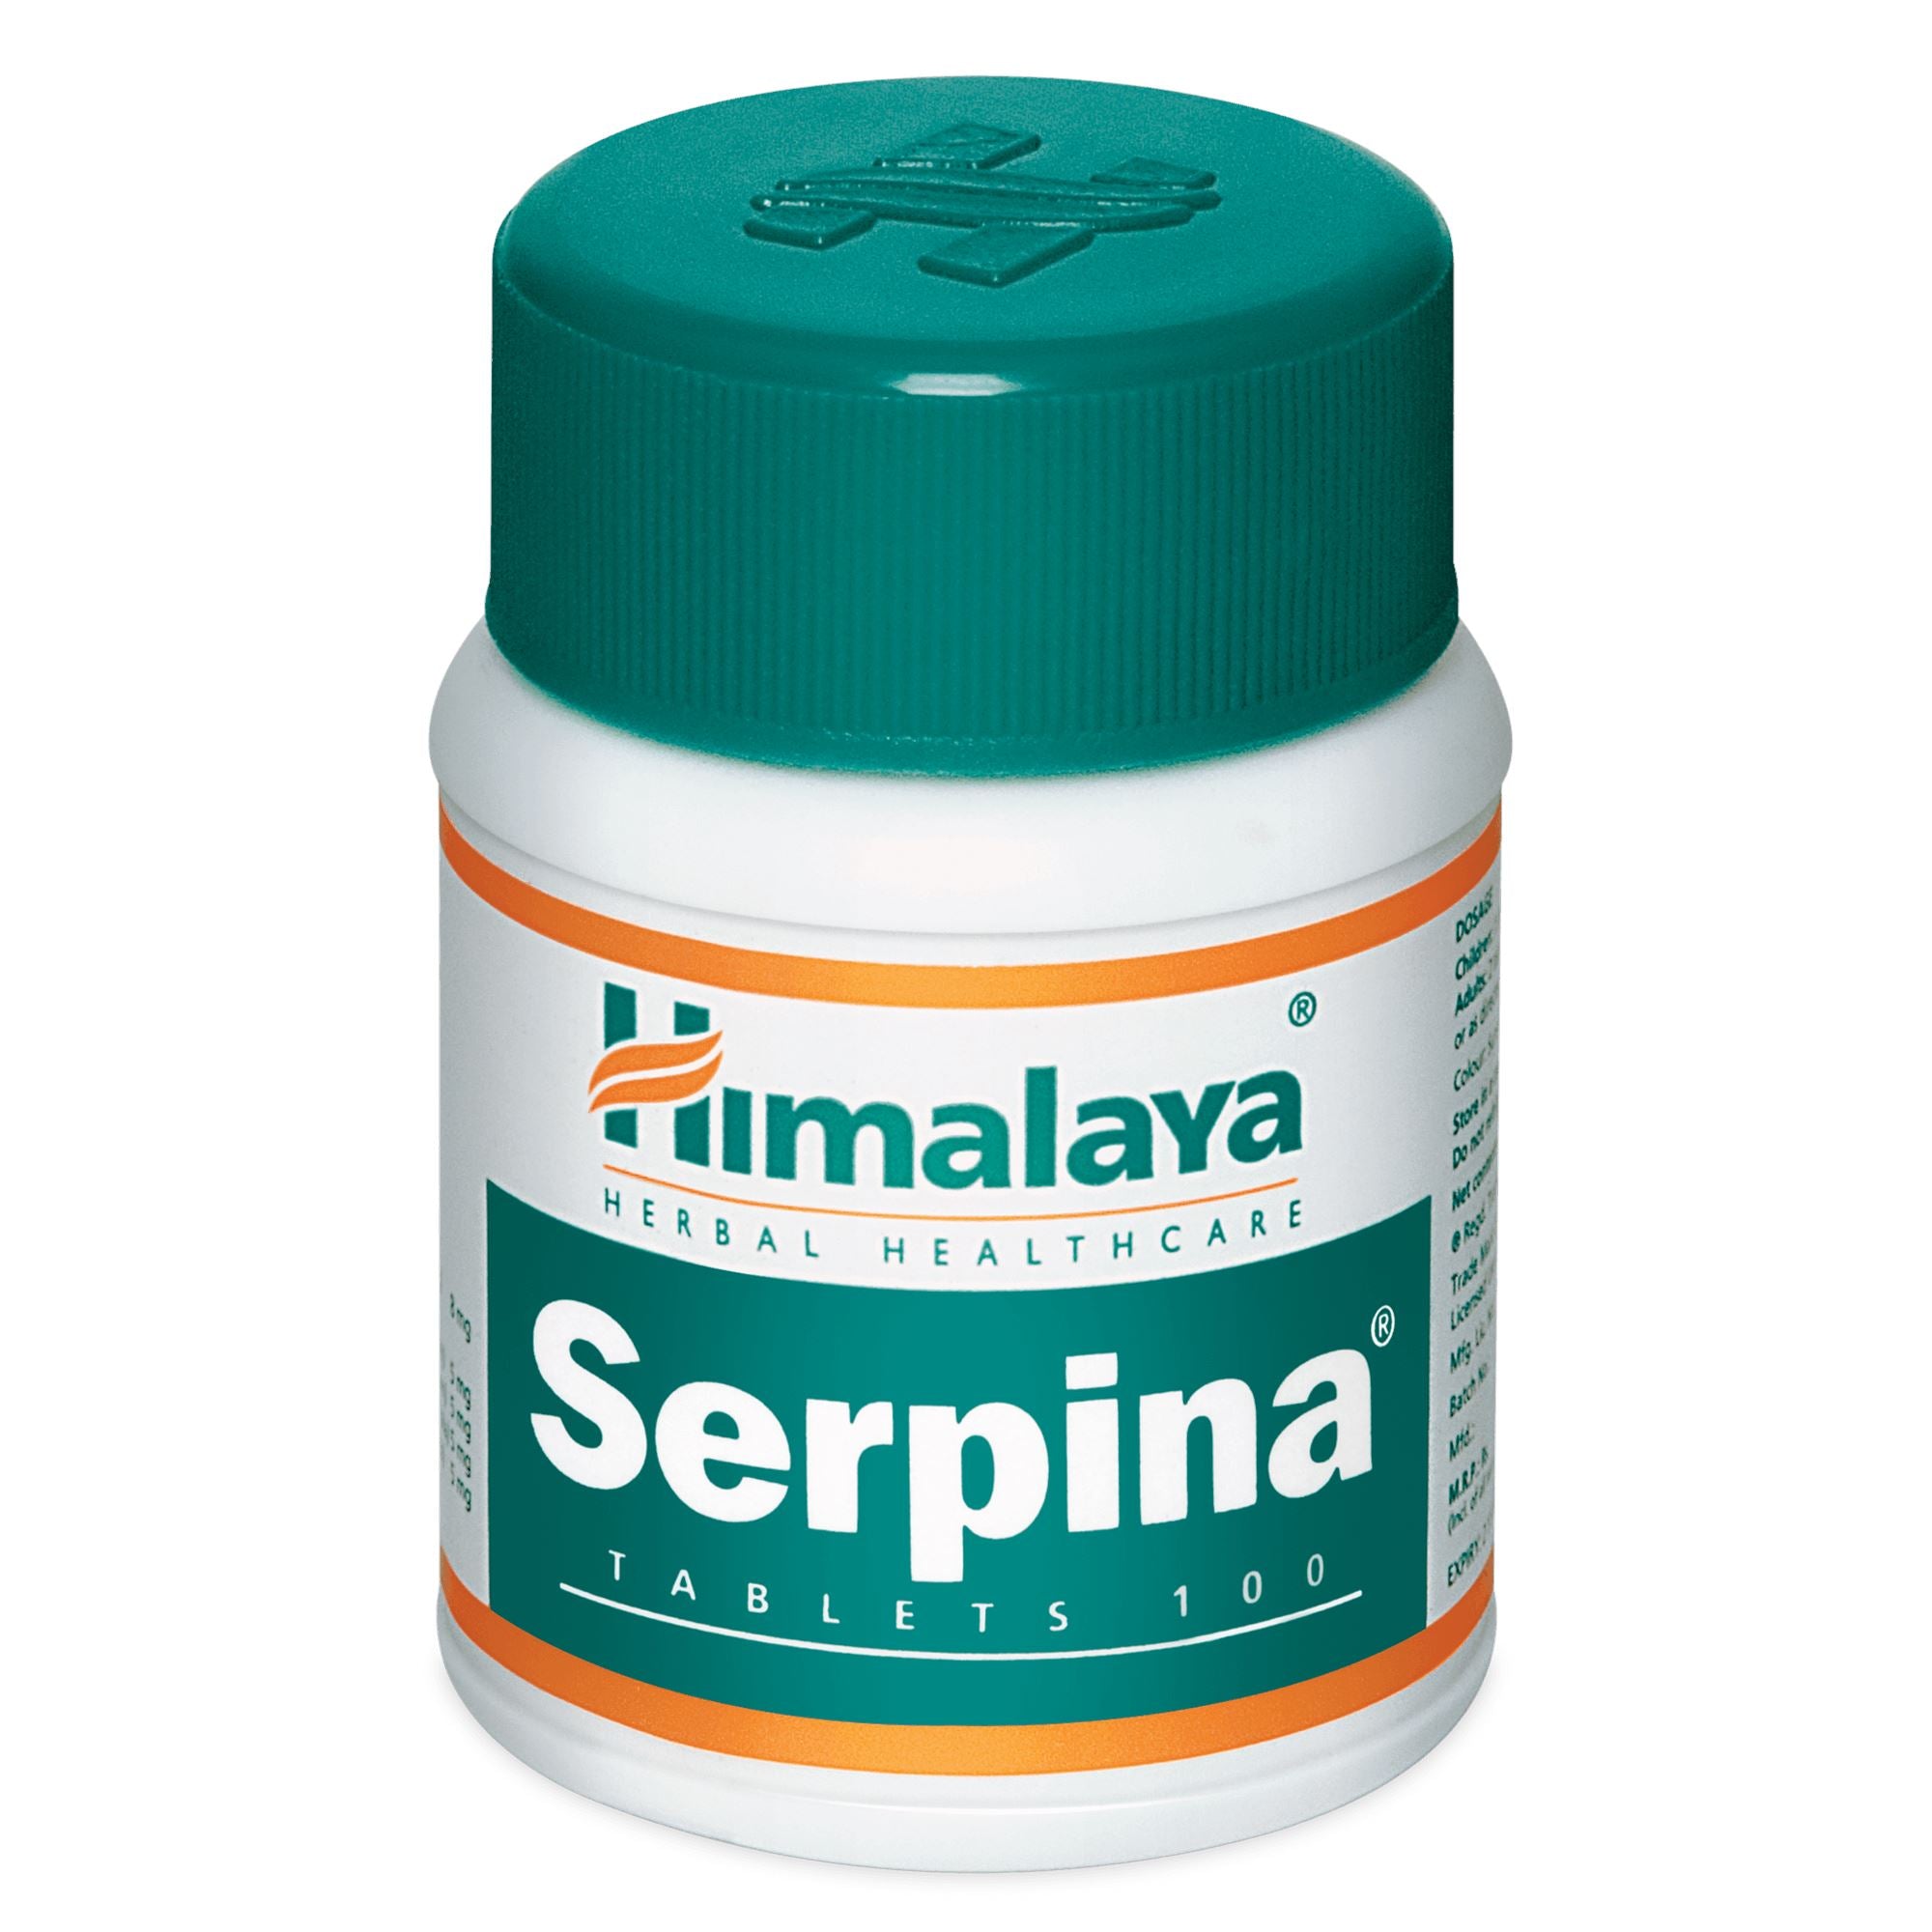 Himalaya Serpina - Tablets to manage hypertension